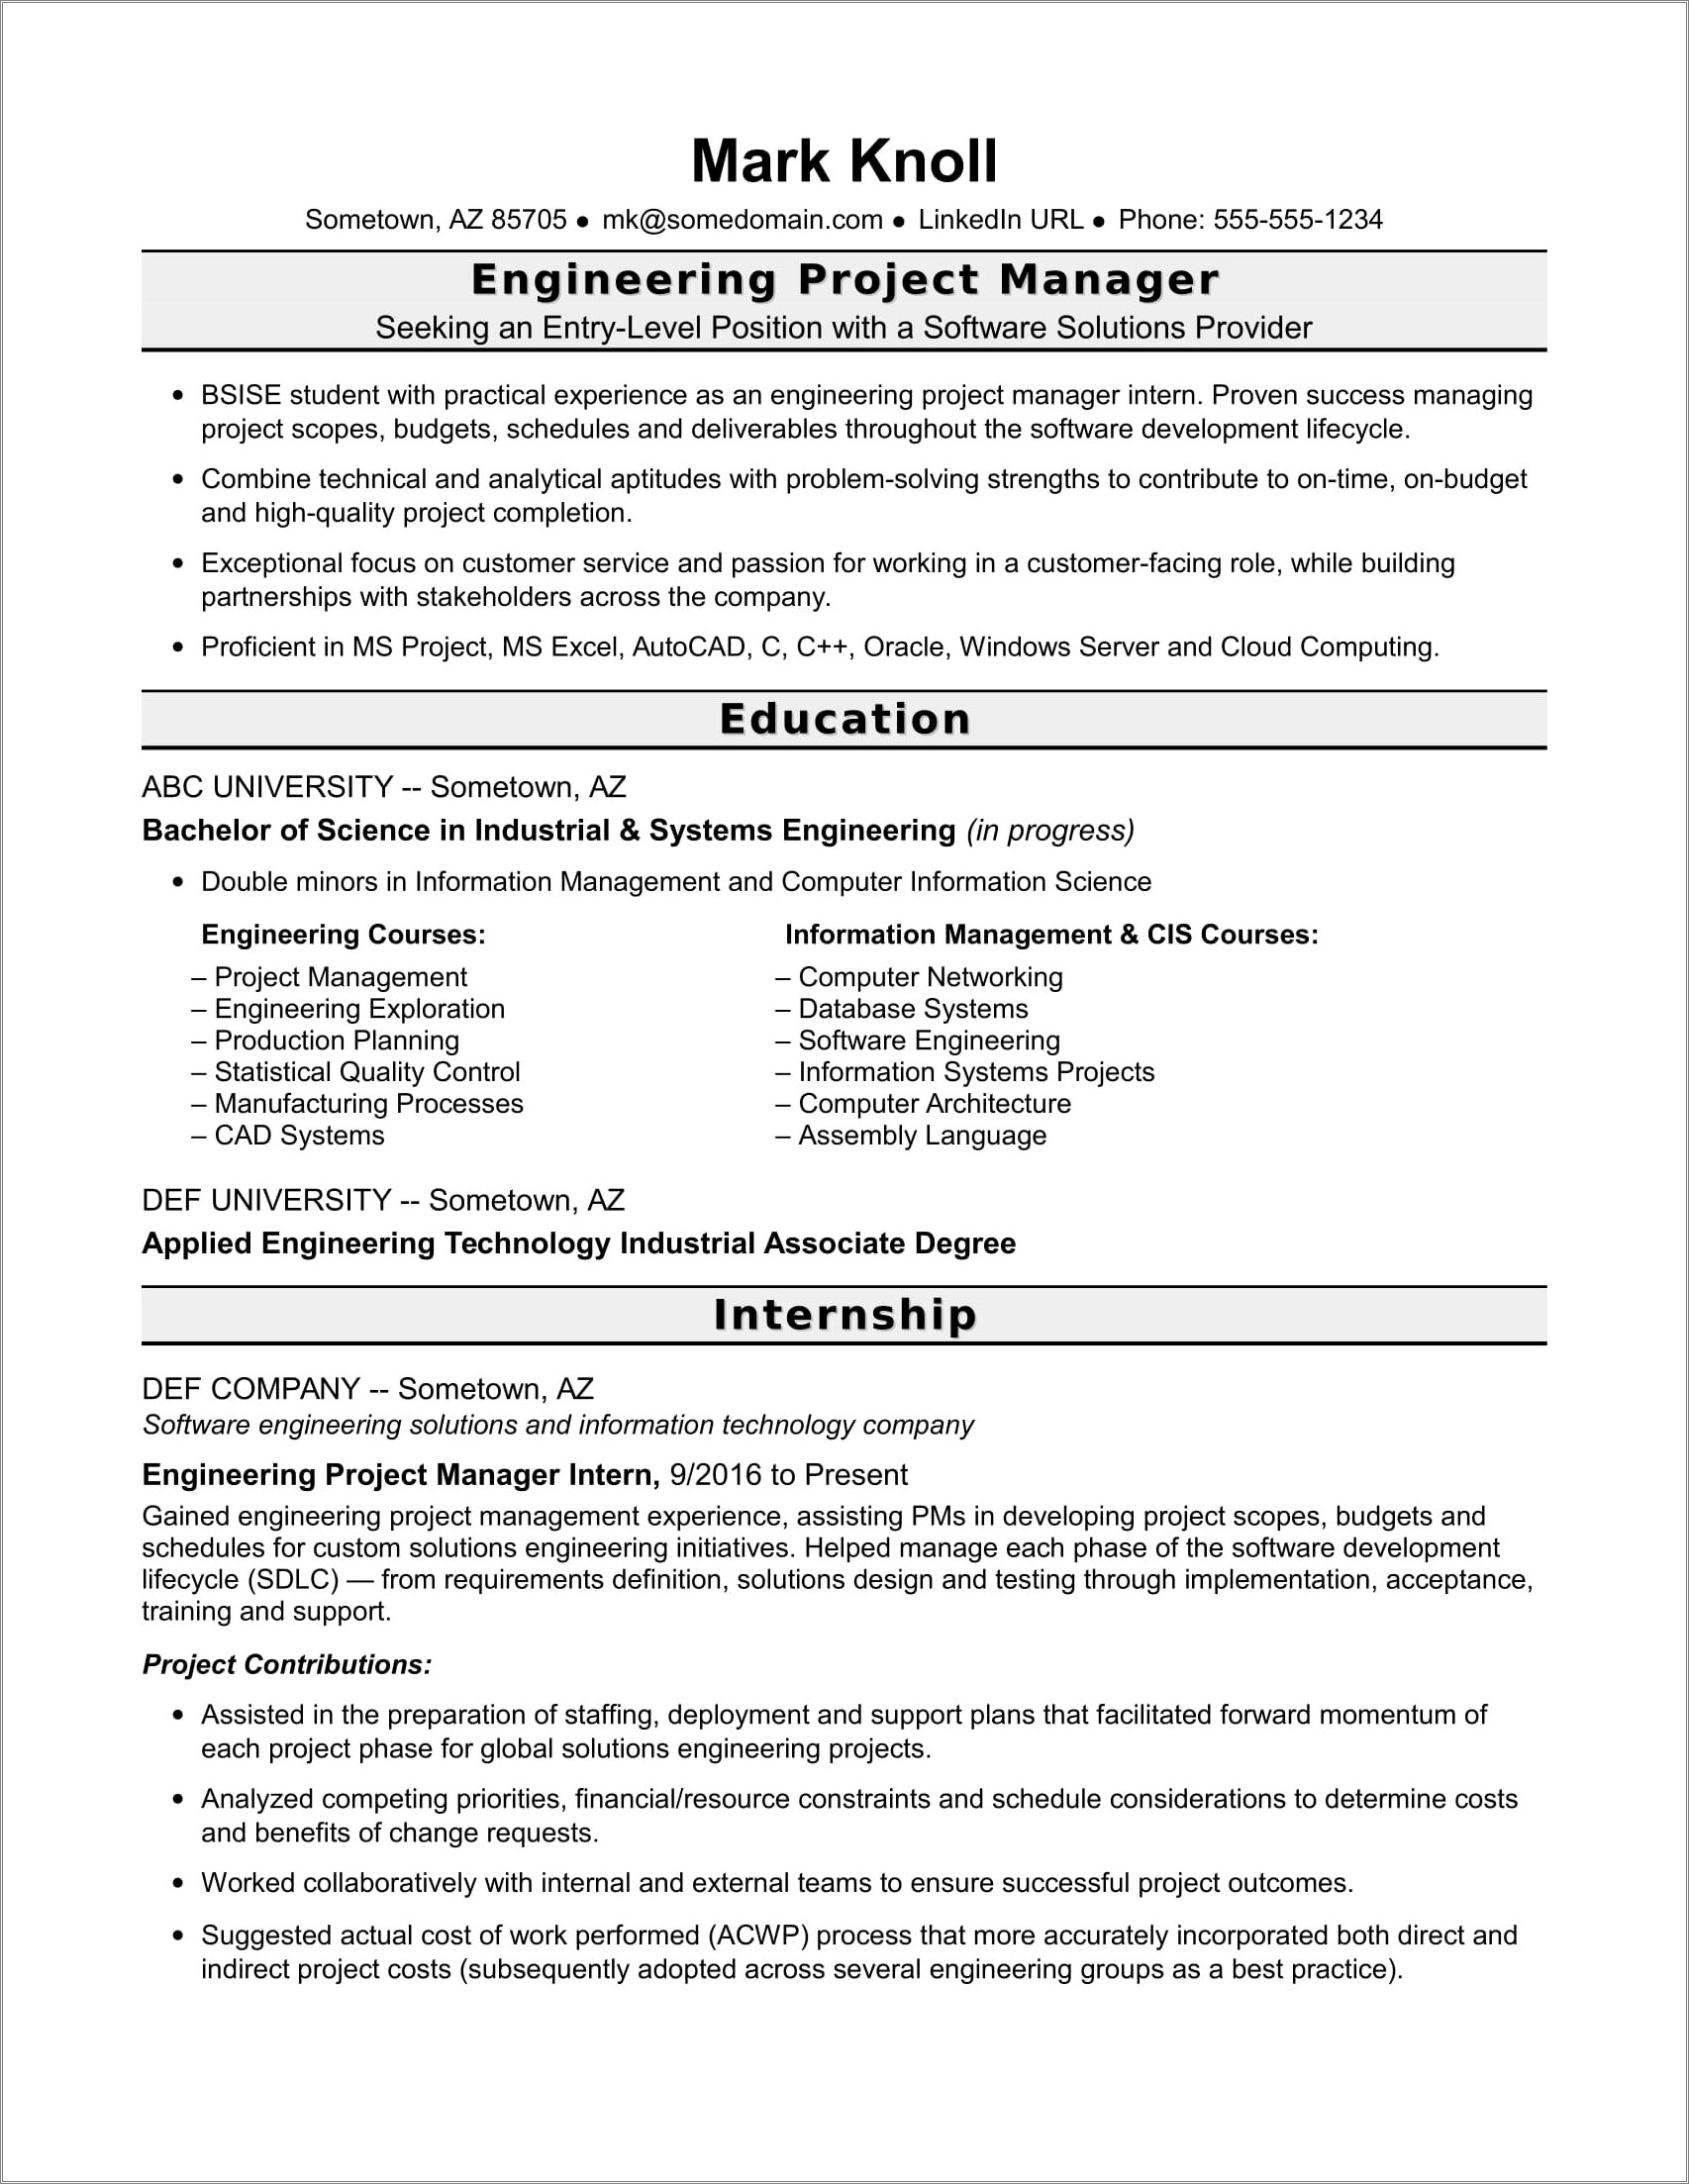 Resume Keyword On Construction Management Assistant Engineer